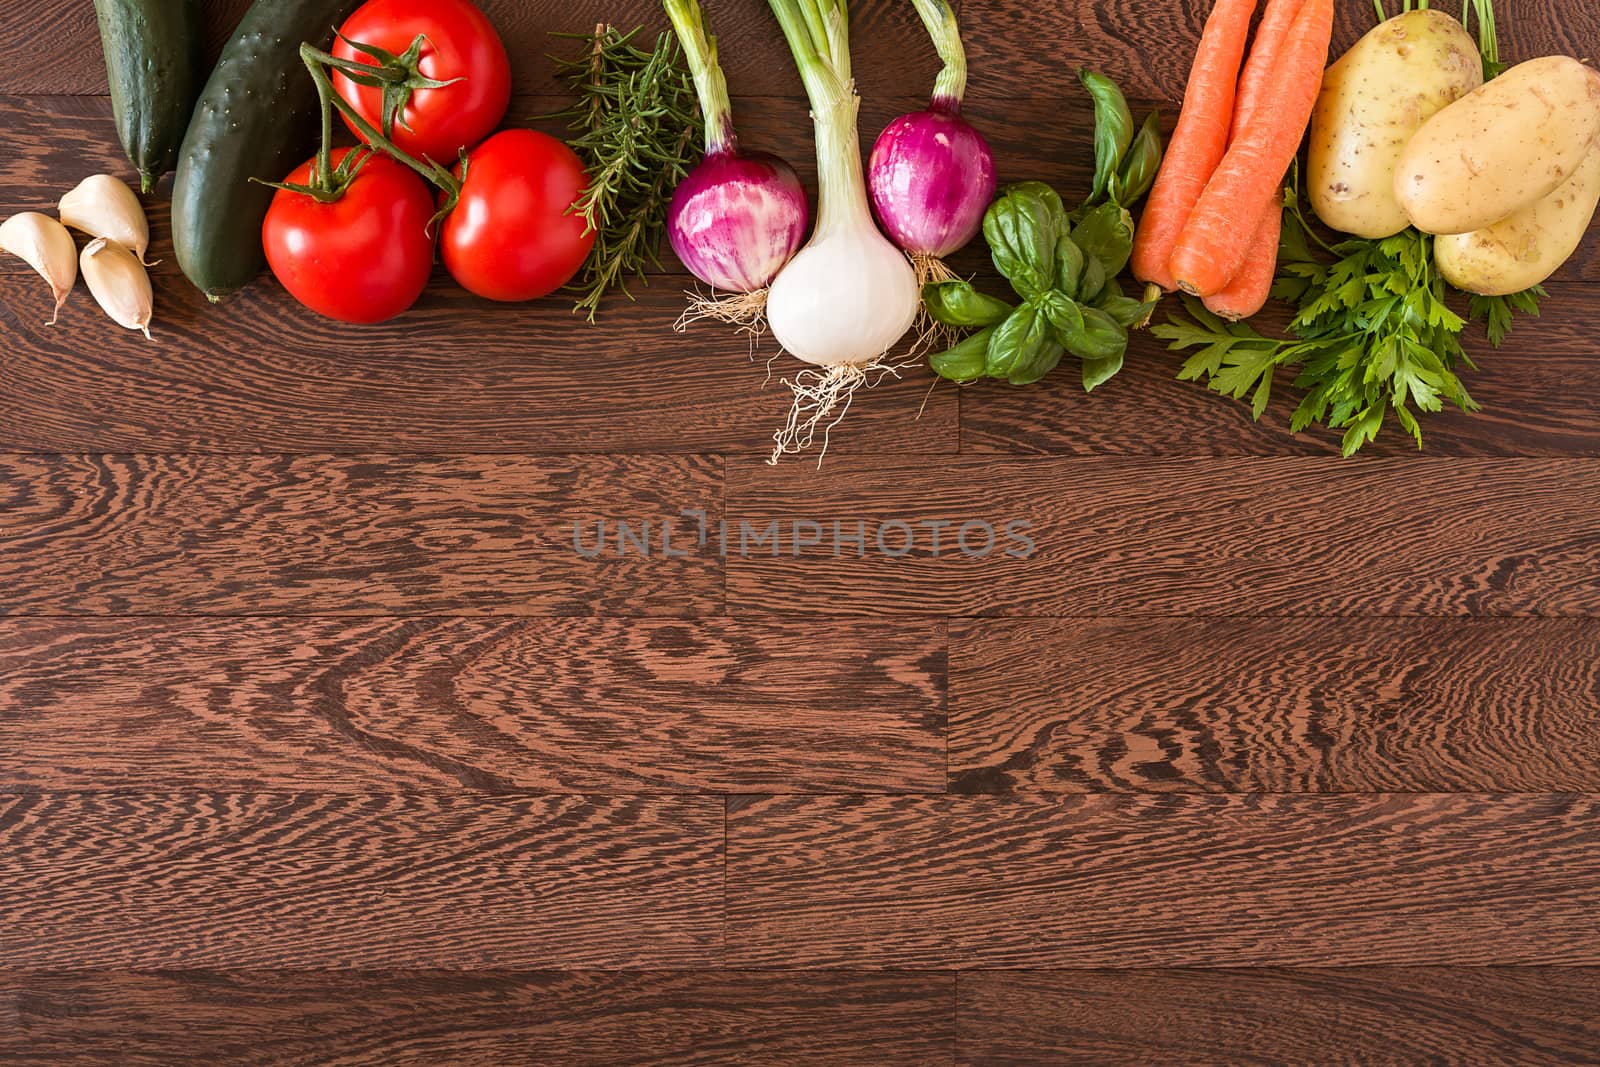 Assorted raw vegetables by LuigiMorbidelli